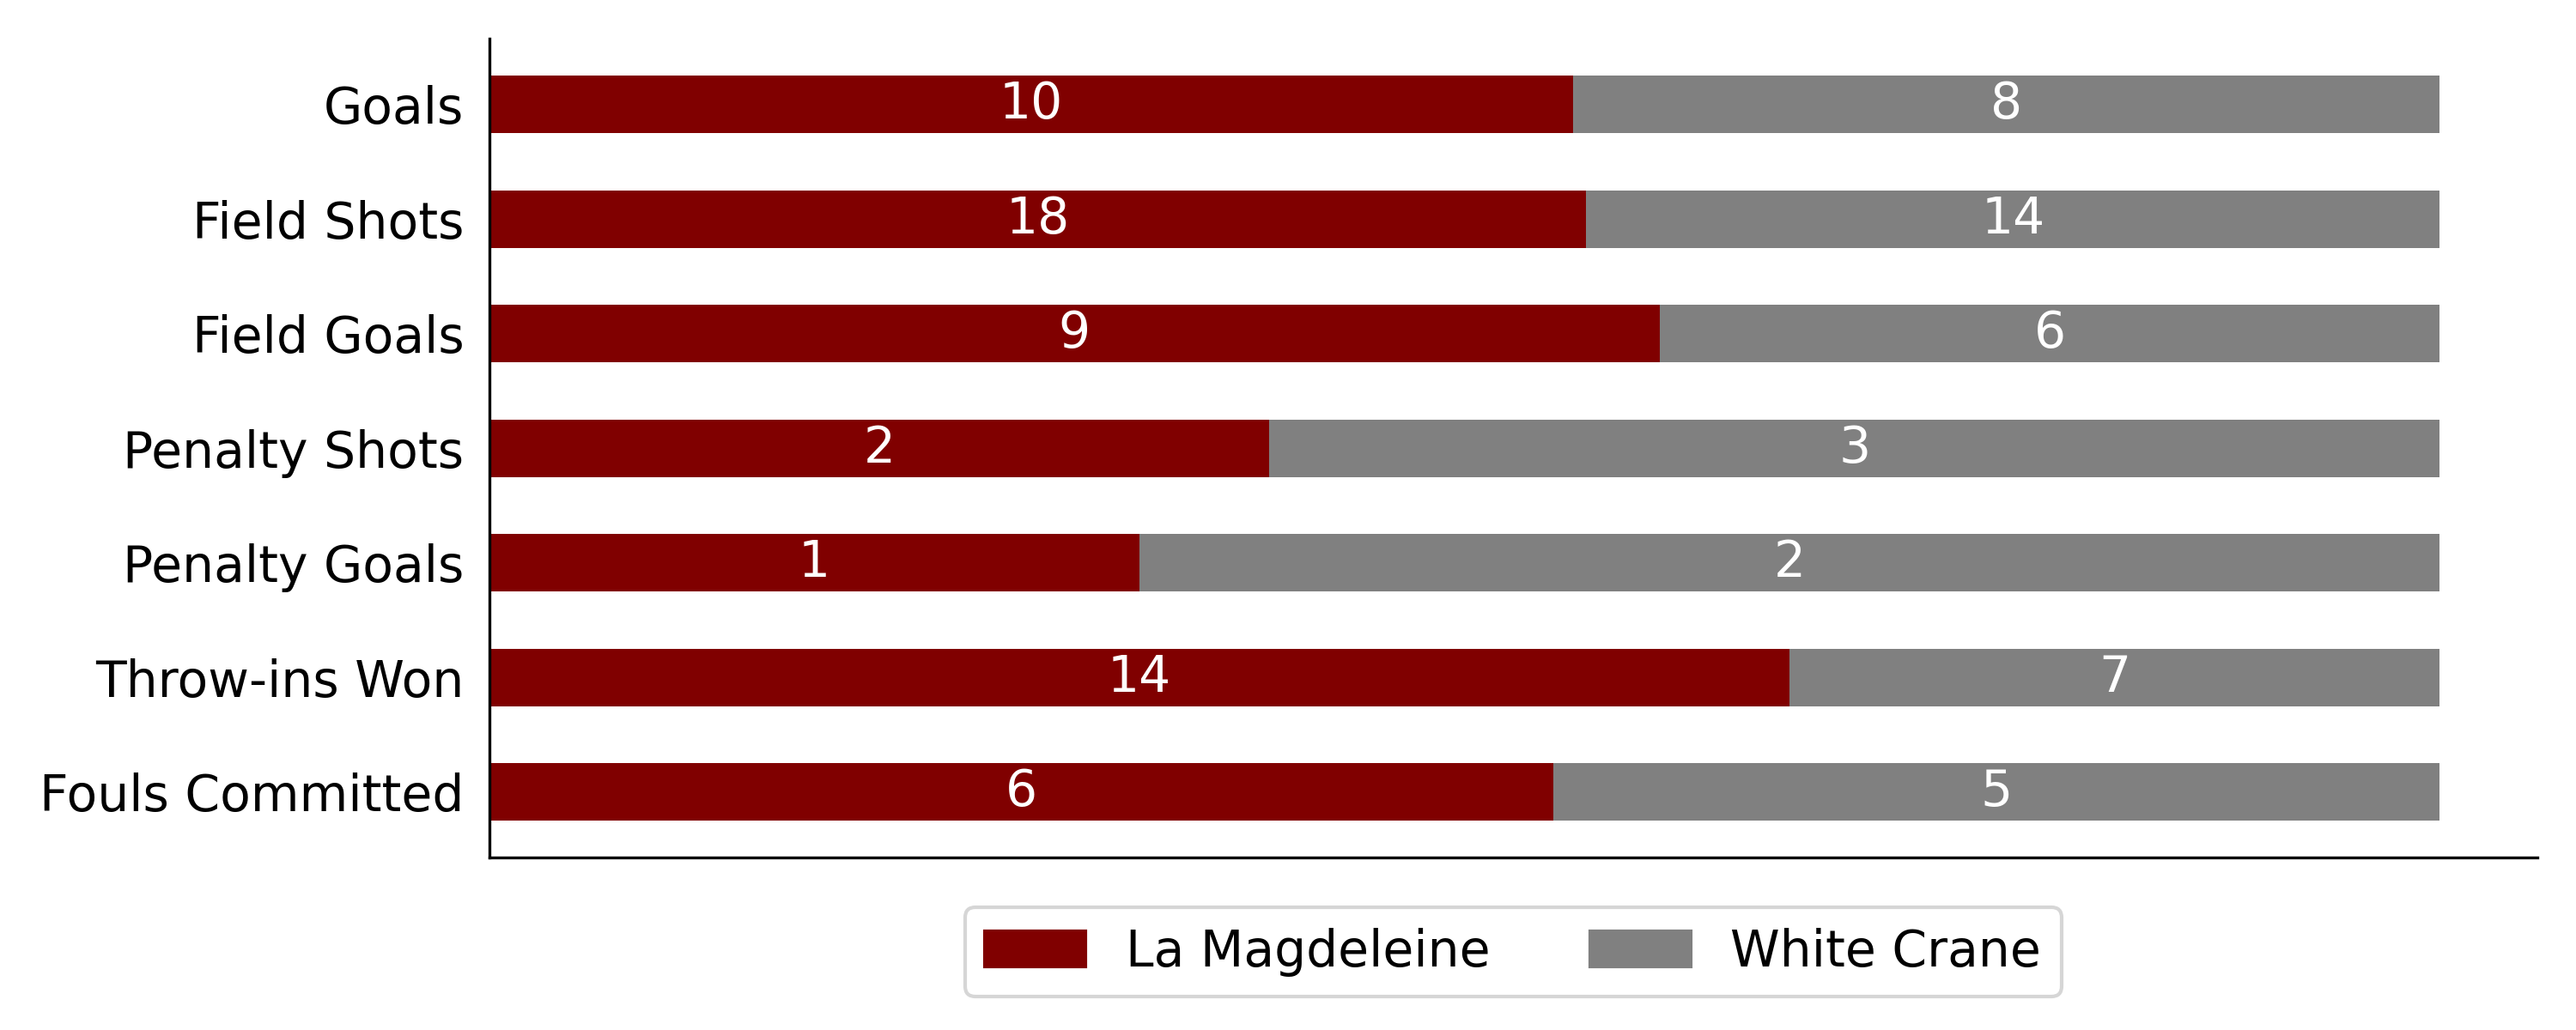 La Magdeleine 6